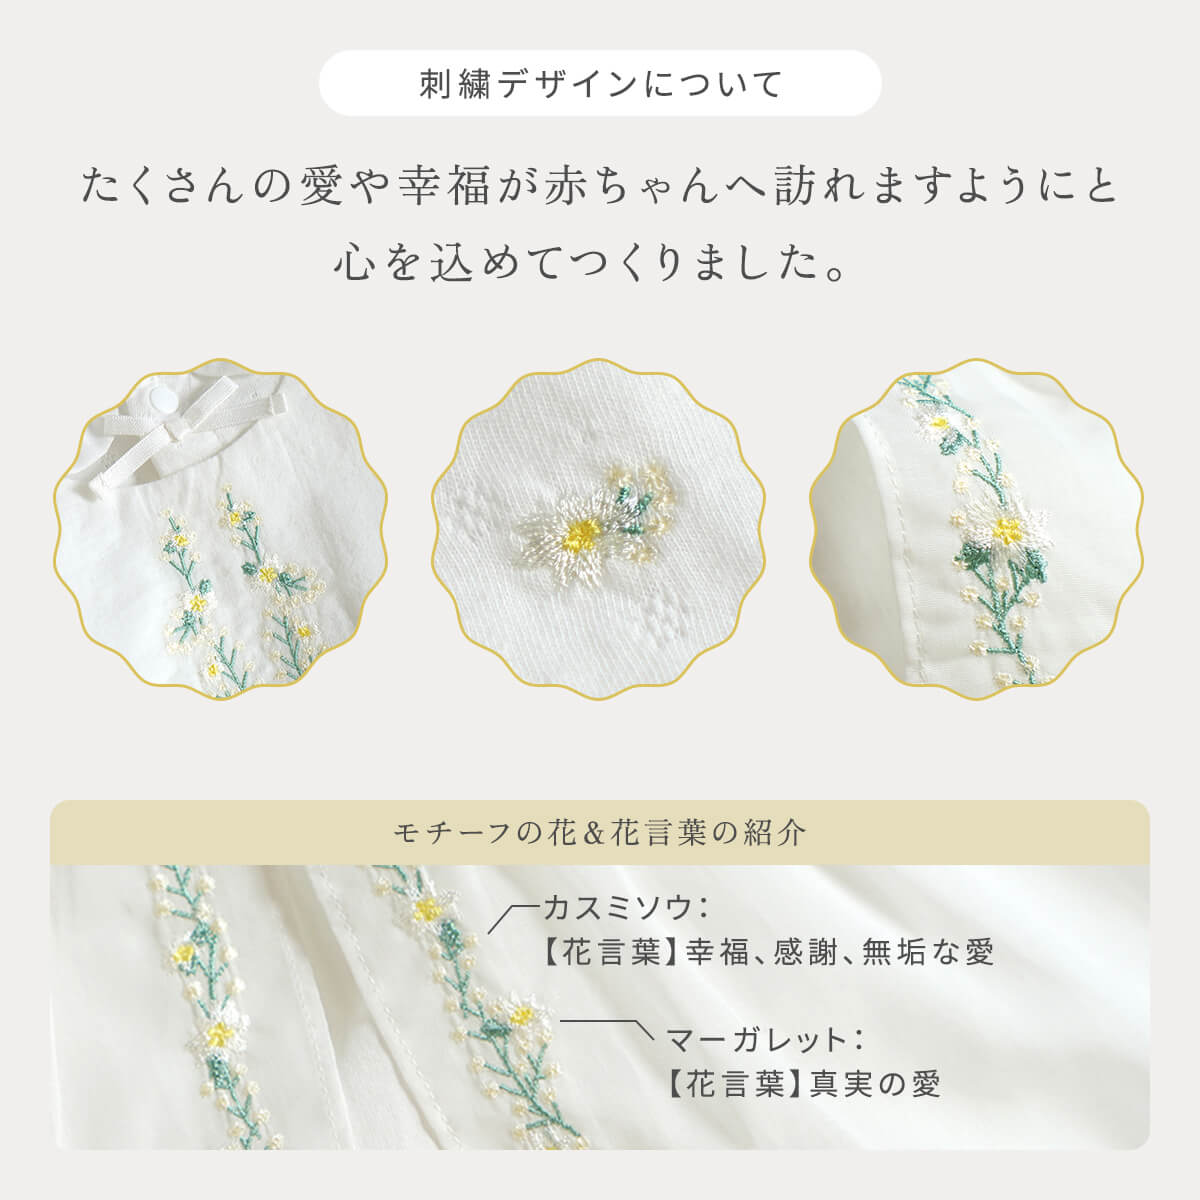 flower刺繍セレモニードレス  50-70cm / Hoppetta